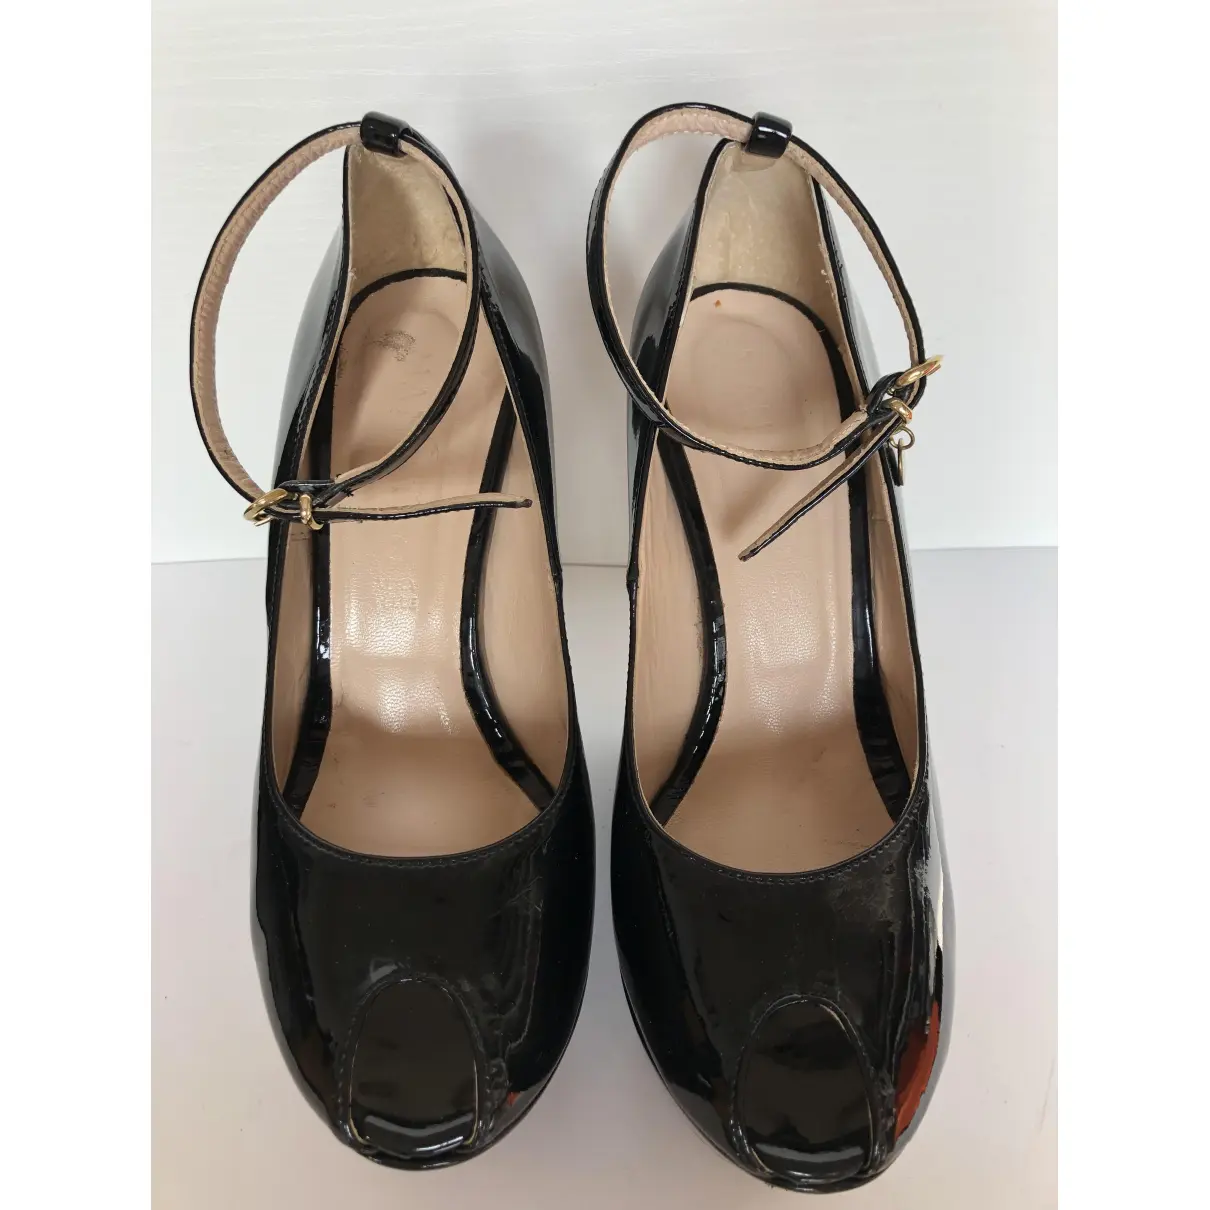 Buy Mangano Leather heels online